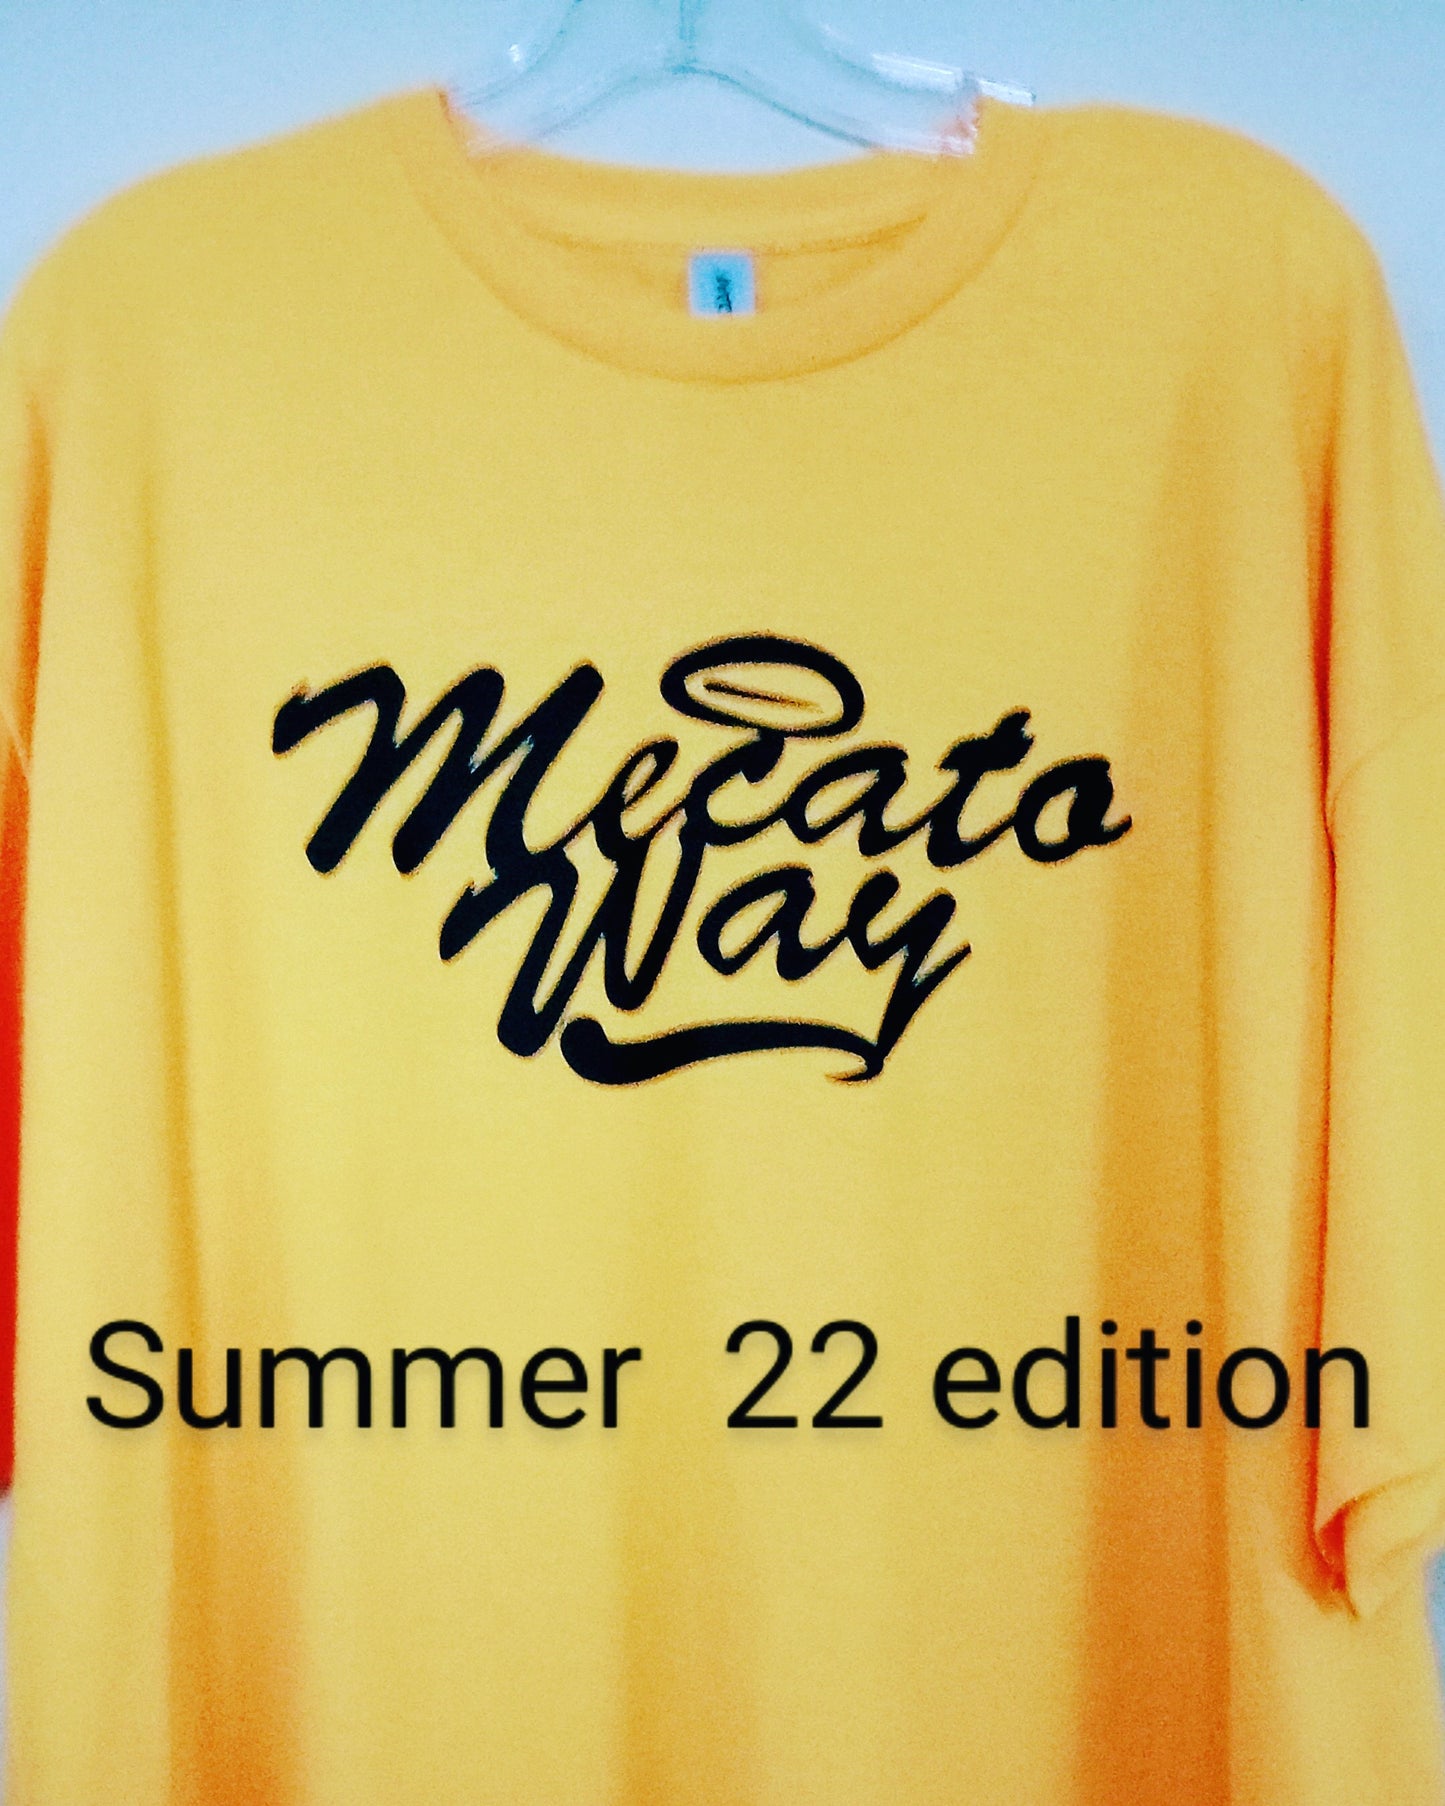 Mecatoway custom T-shirts